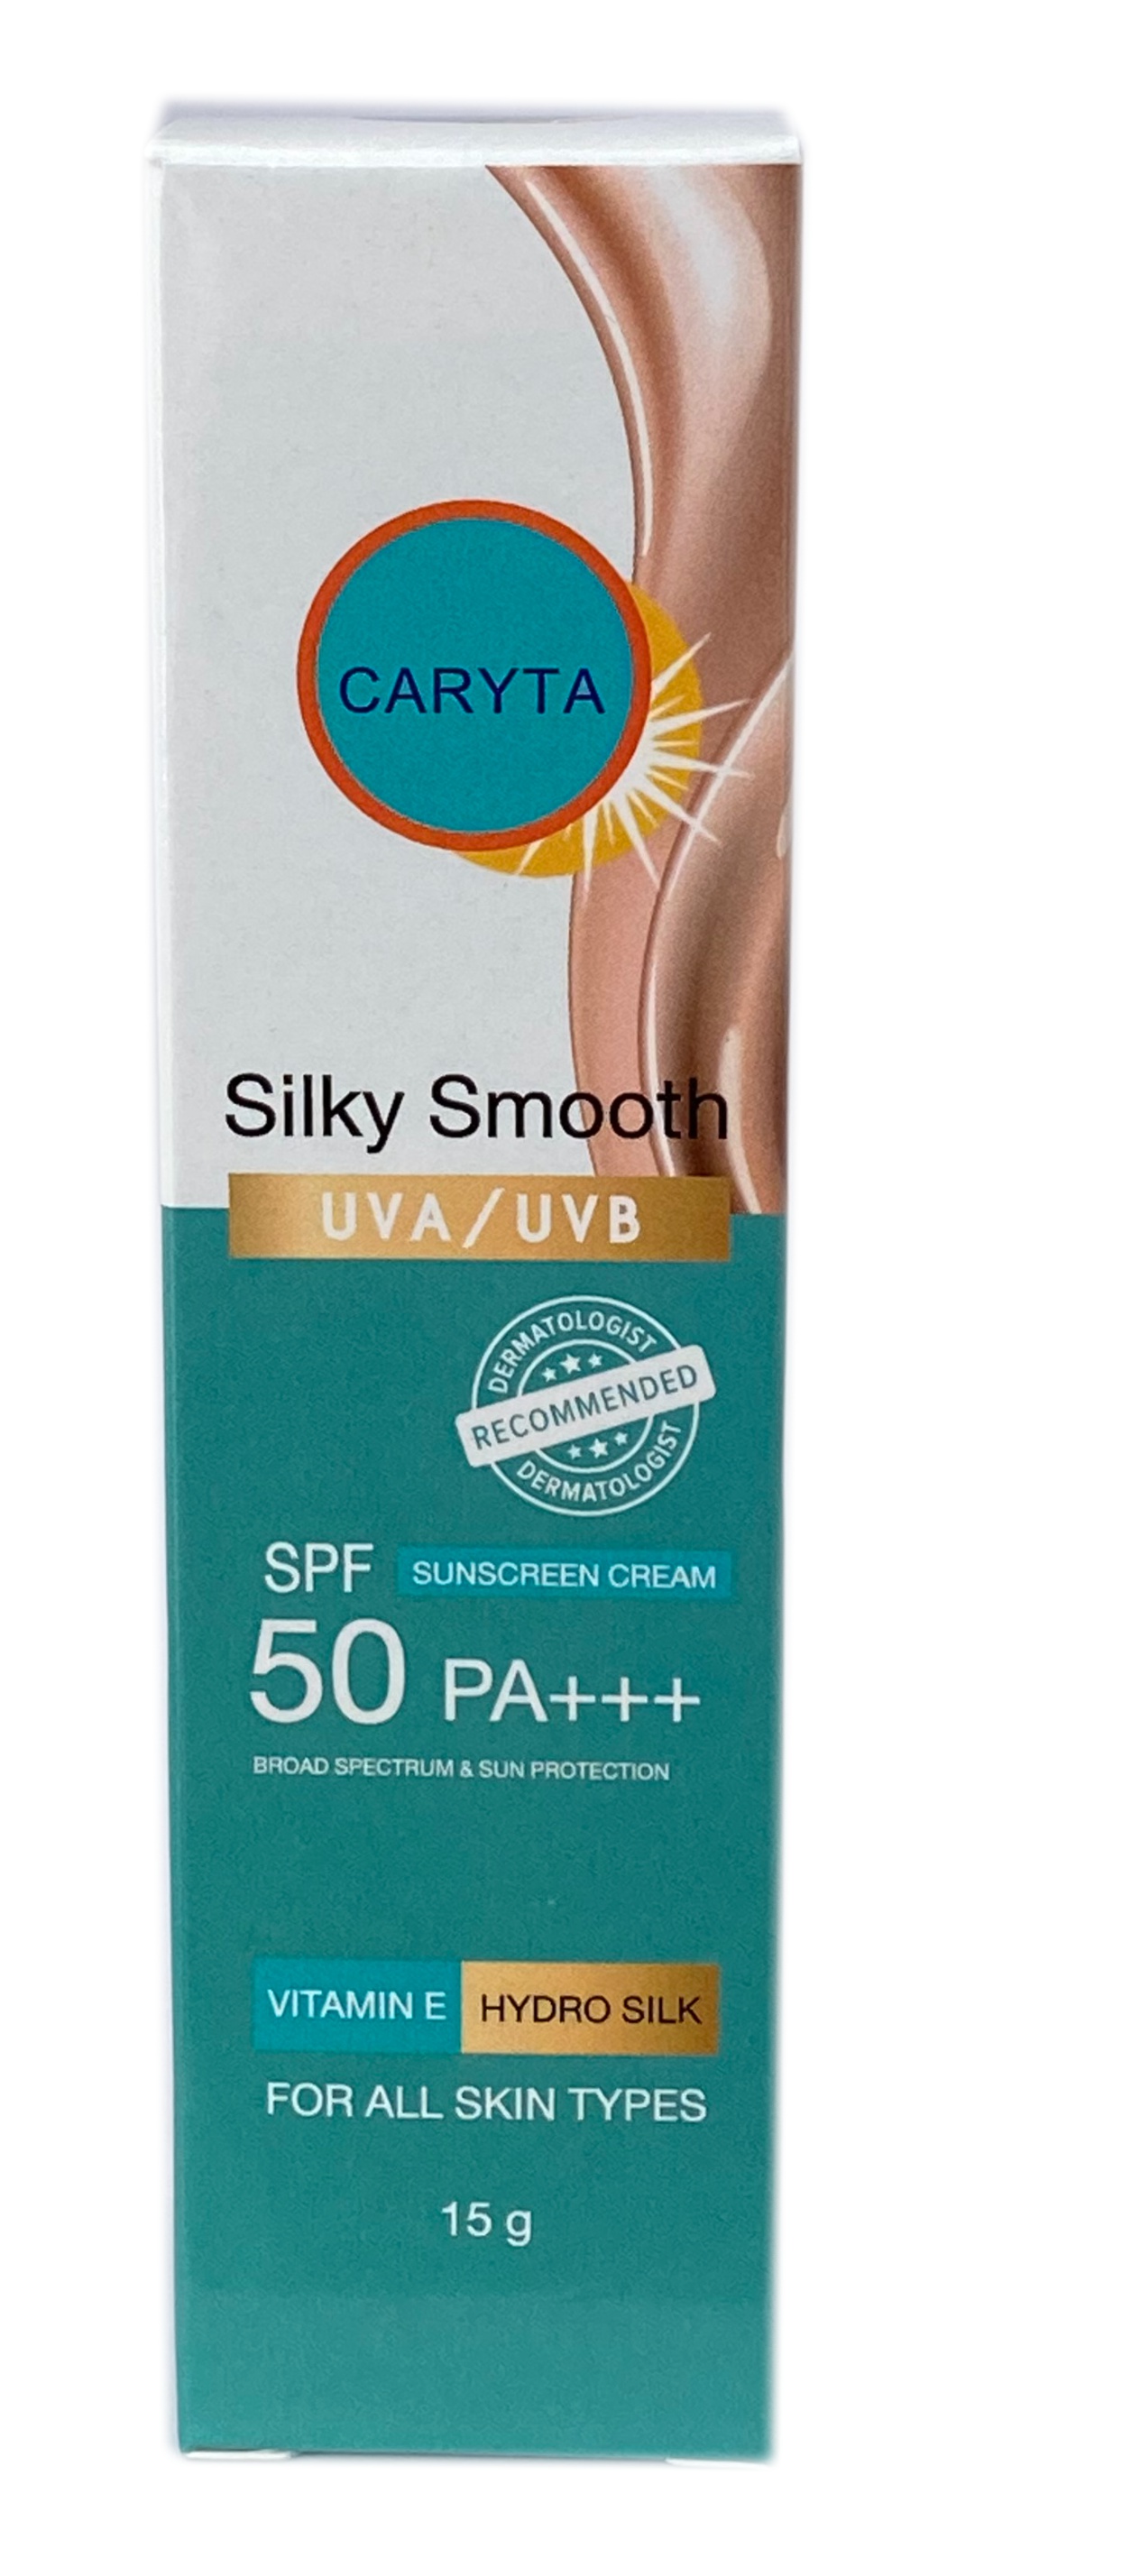 CARYTA Silky Smooth UVA/UVB Sunscreen SPF 50 Pa+++